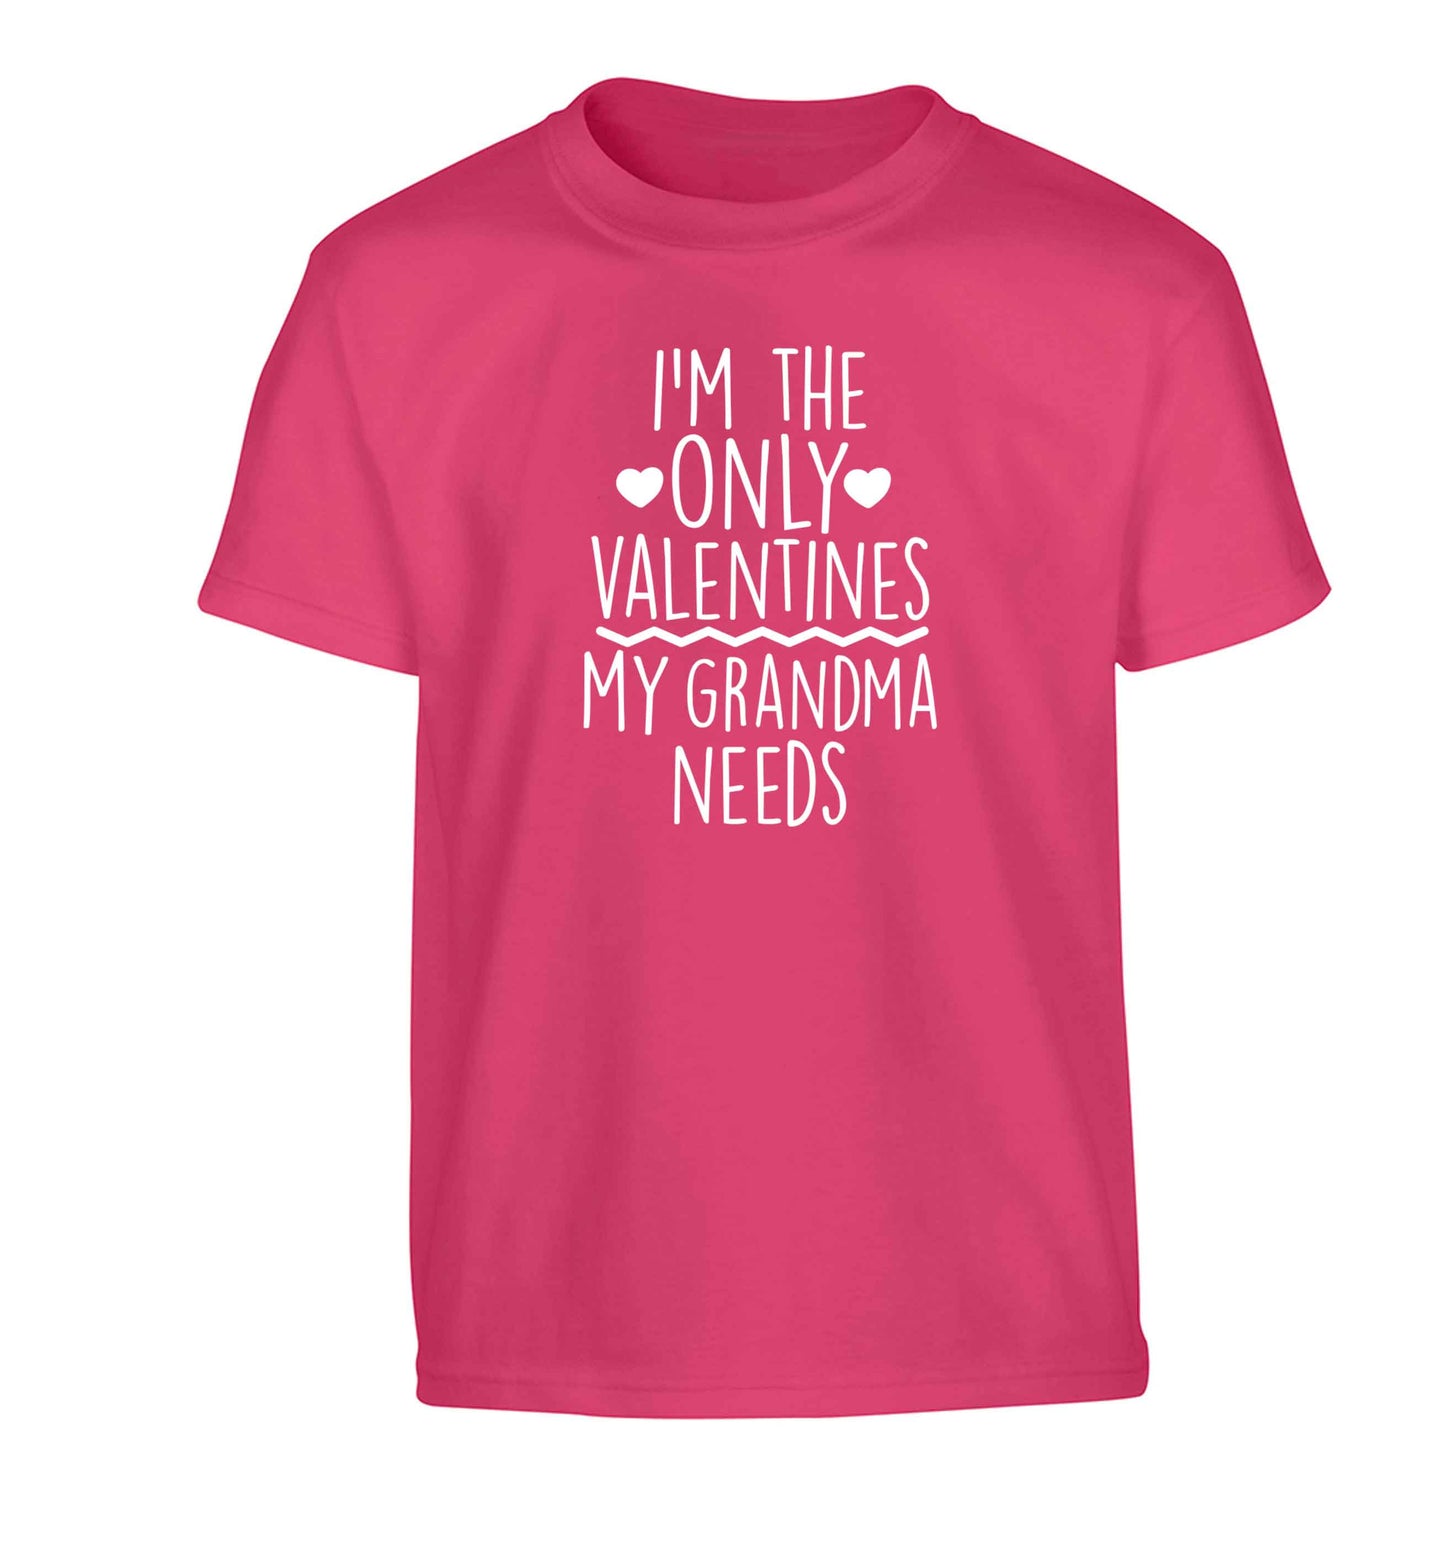 I'm the only valentines my grandma needs Children's pink Tshirt 12-13 Years